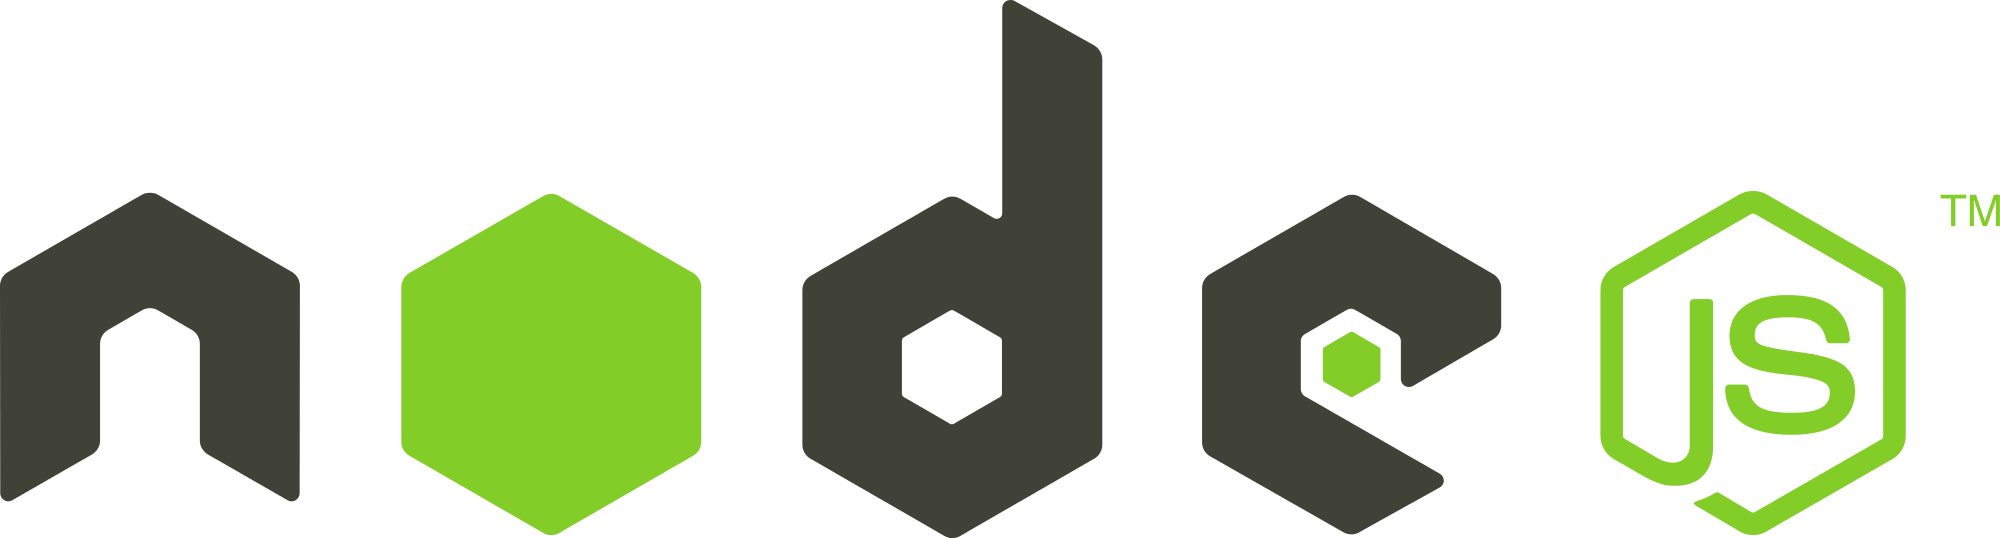 open source java script platform - Node